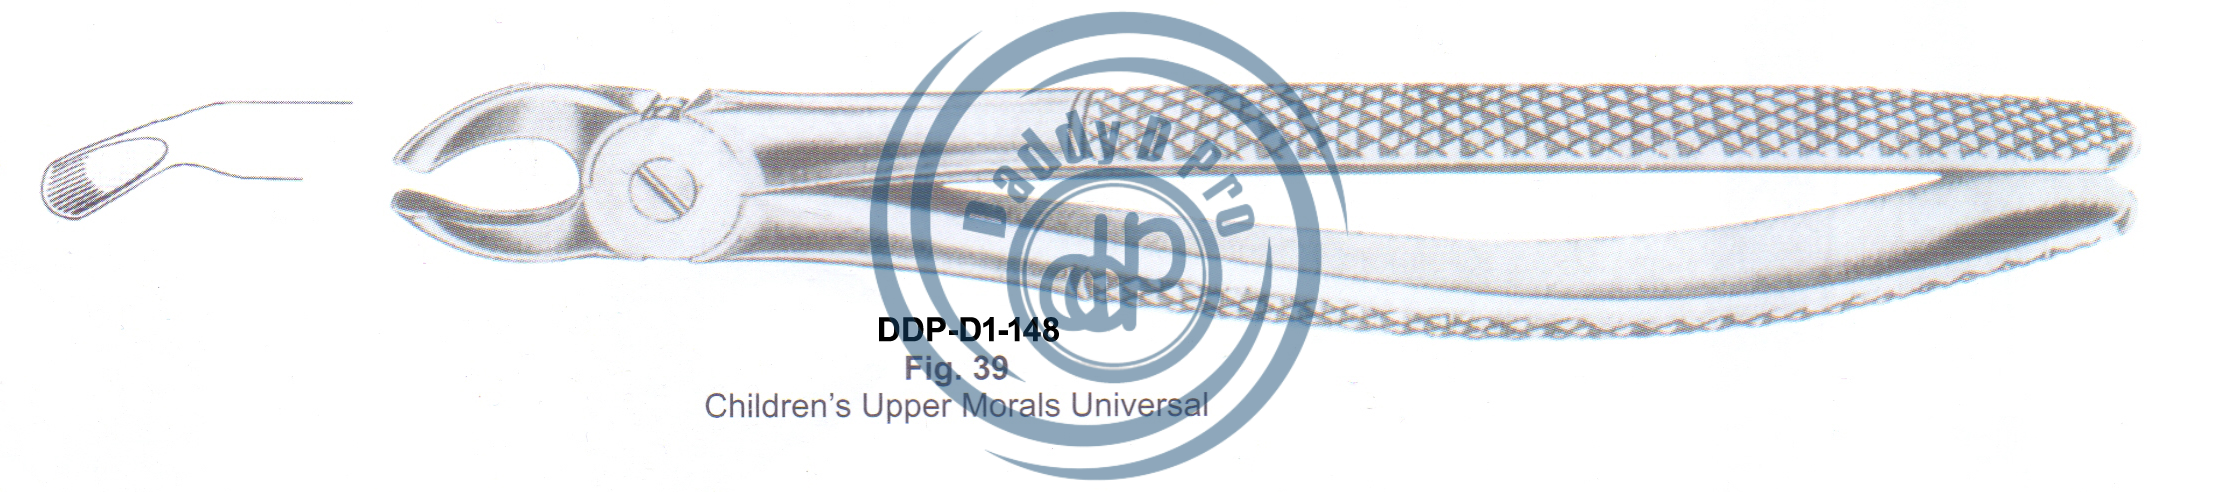 images/DDP-D1-148.png